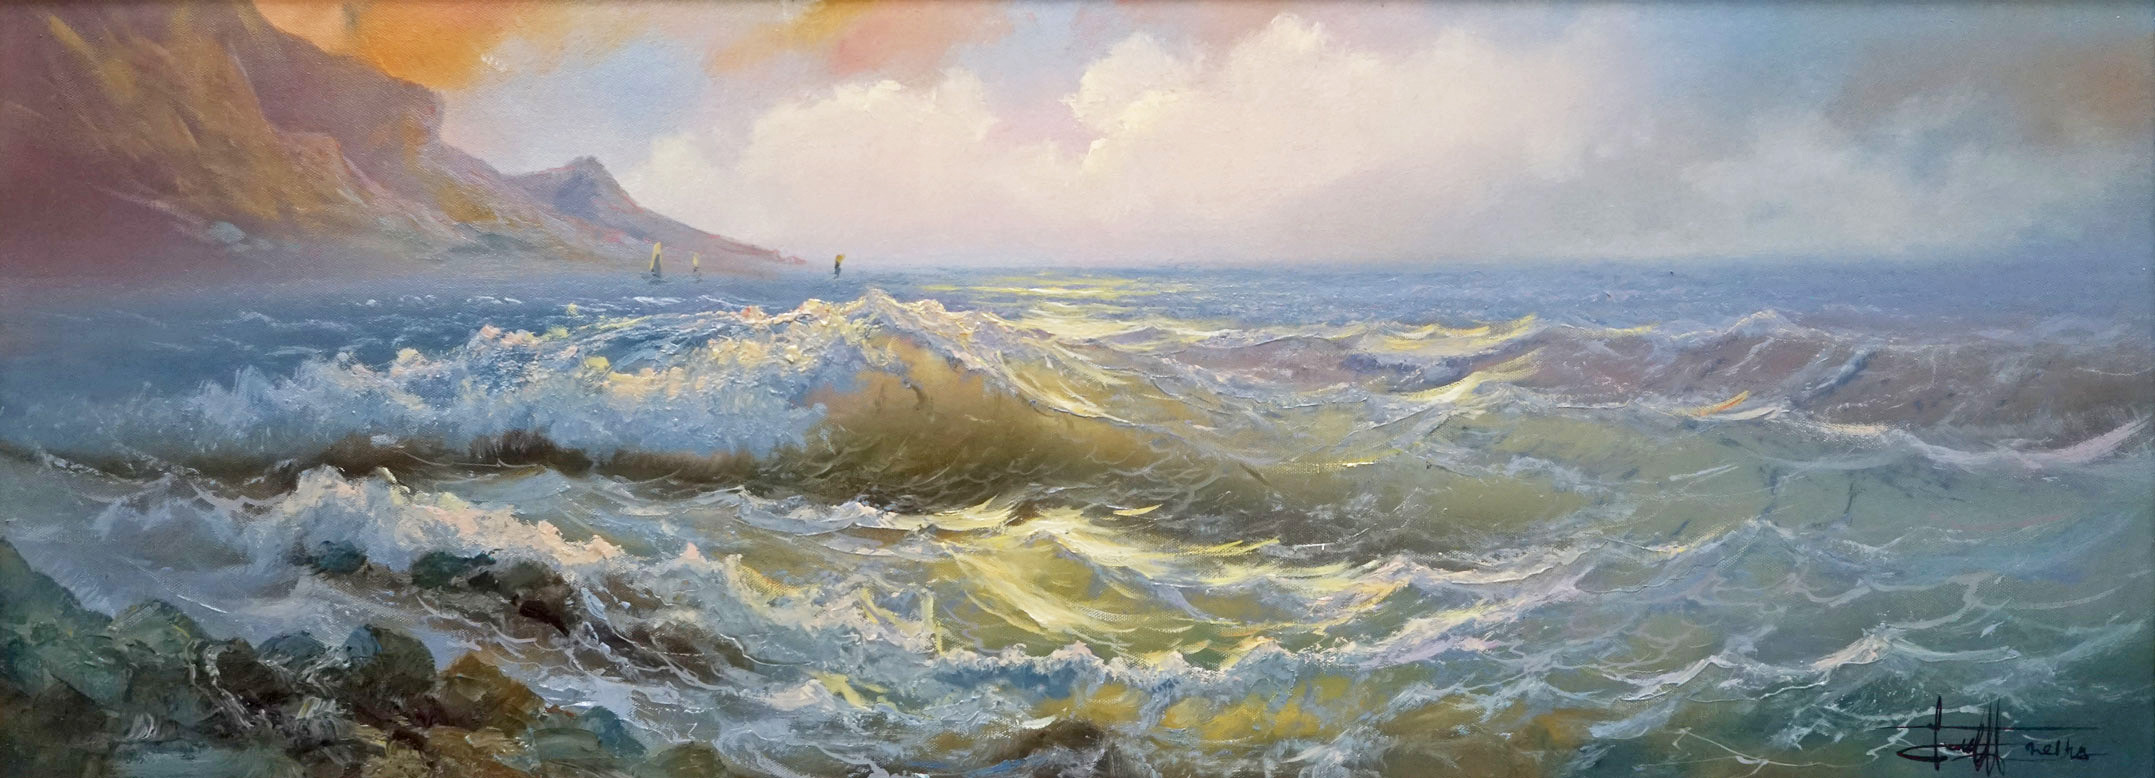 Seashore - 1, Dmitry Balakhonov, Buy the painting Oil